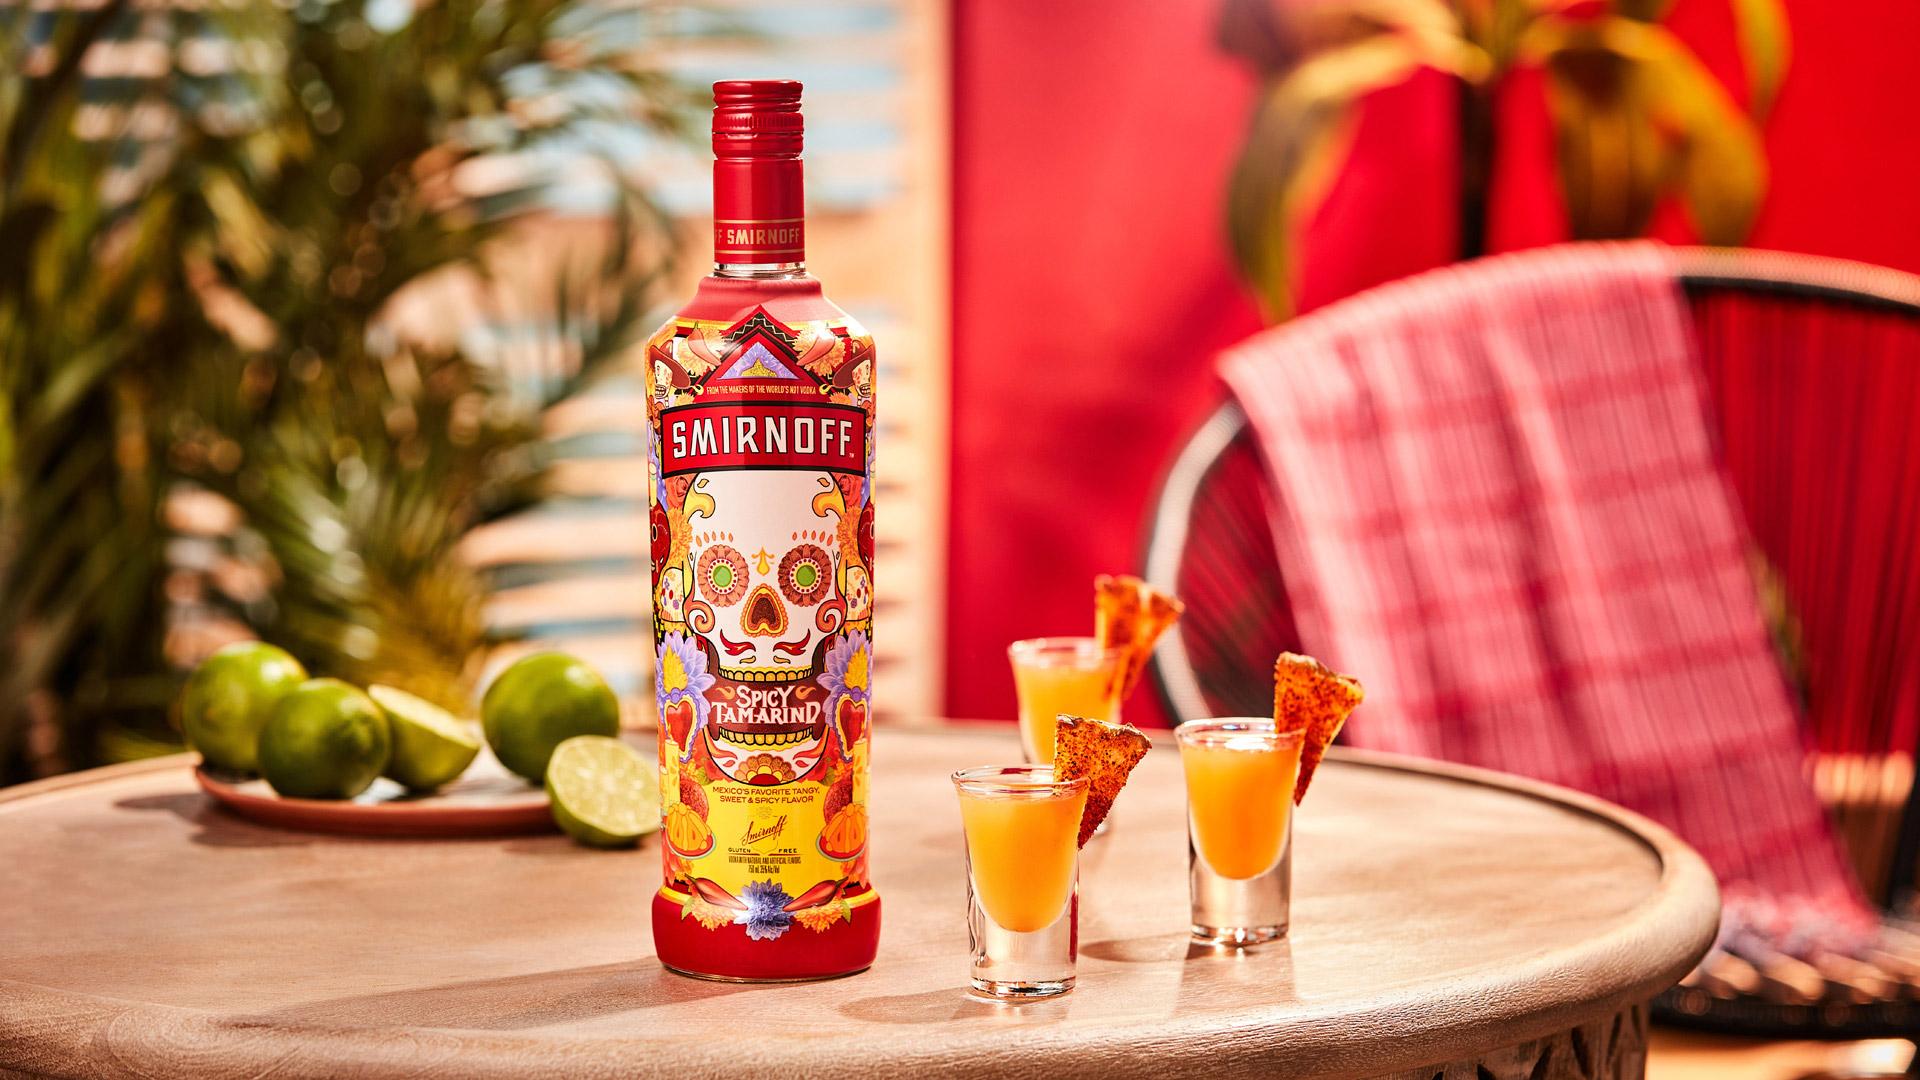 Smirnoff Spicy Tamarind vodka bottle alongside three orange colored Pineapple Drop Shots with spicy seasoning pineapple wedges for garnish. 